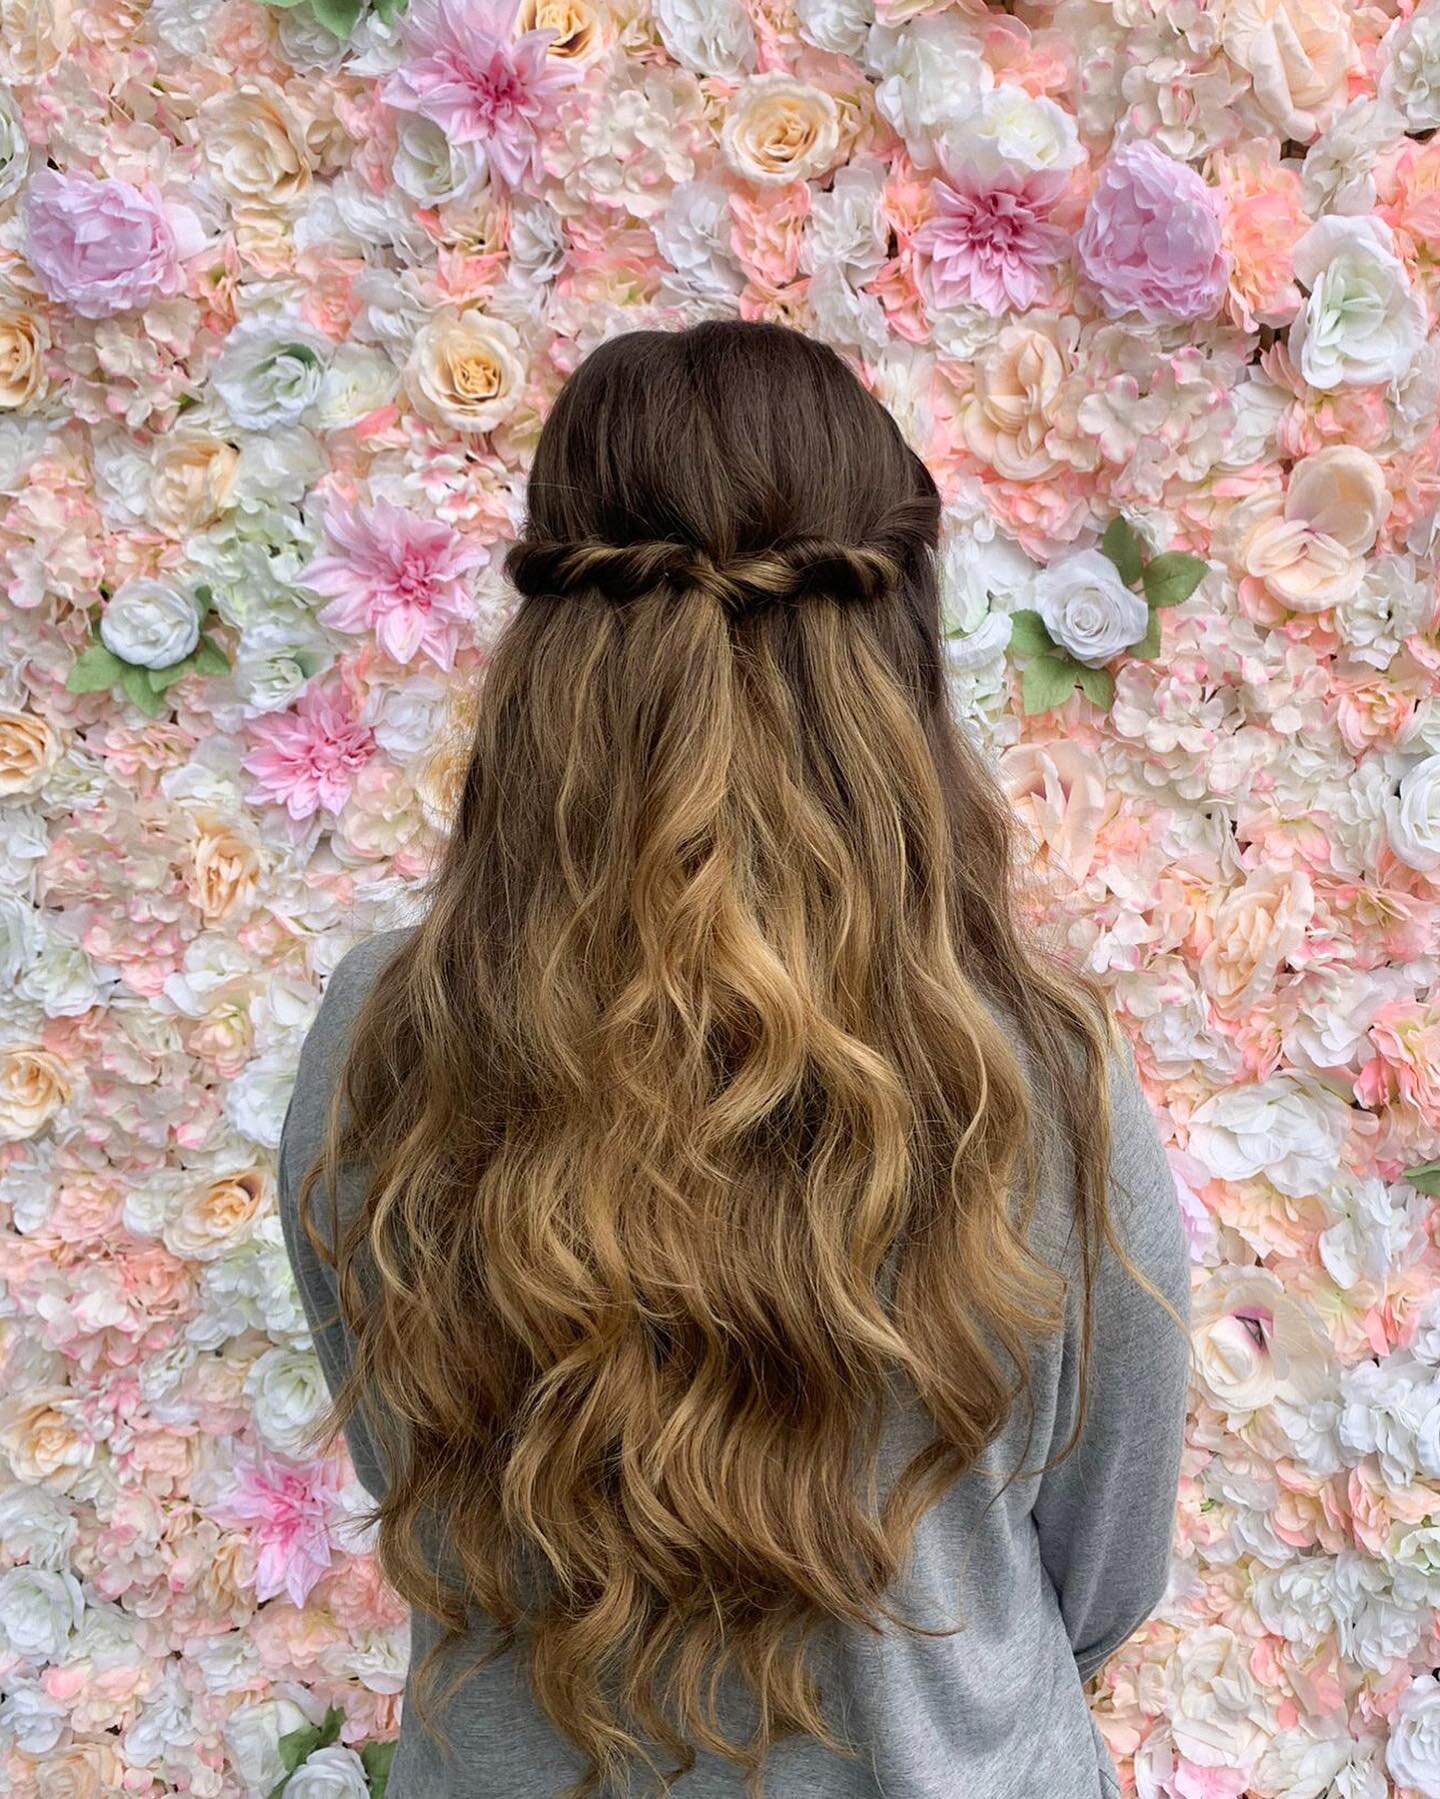 Soft curls with a boho twist by our girl @kirahair_jenevoystudio 💗